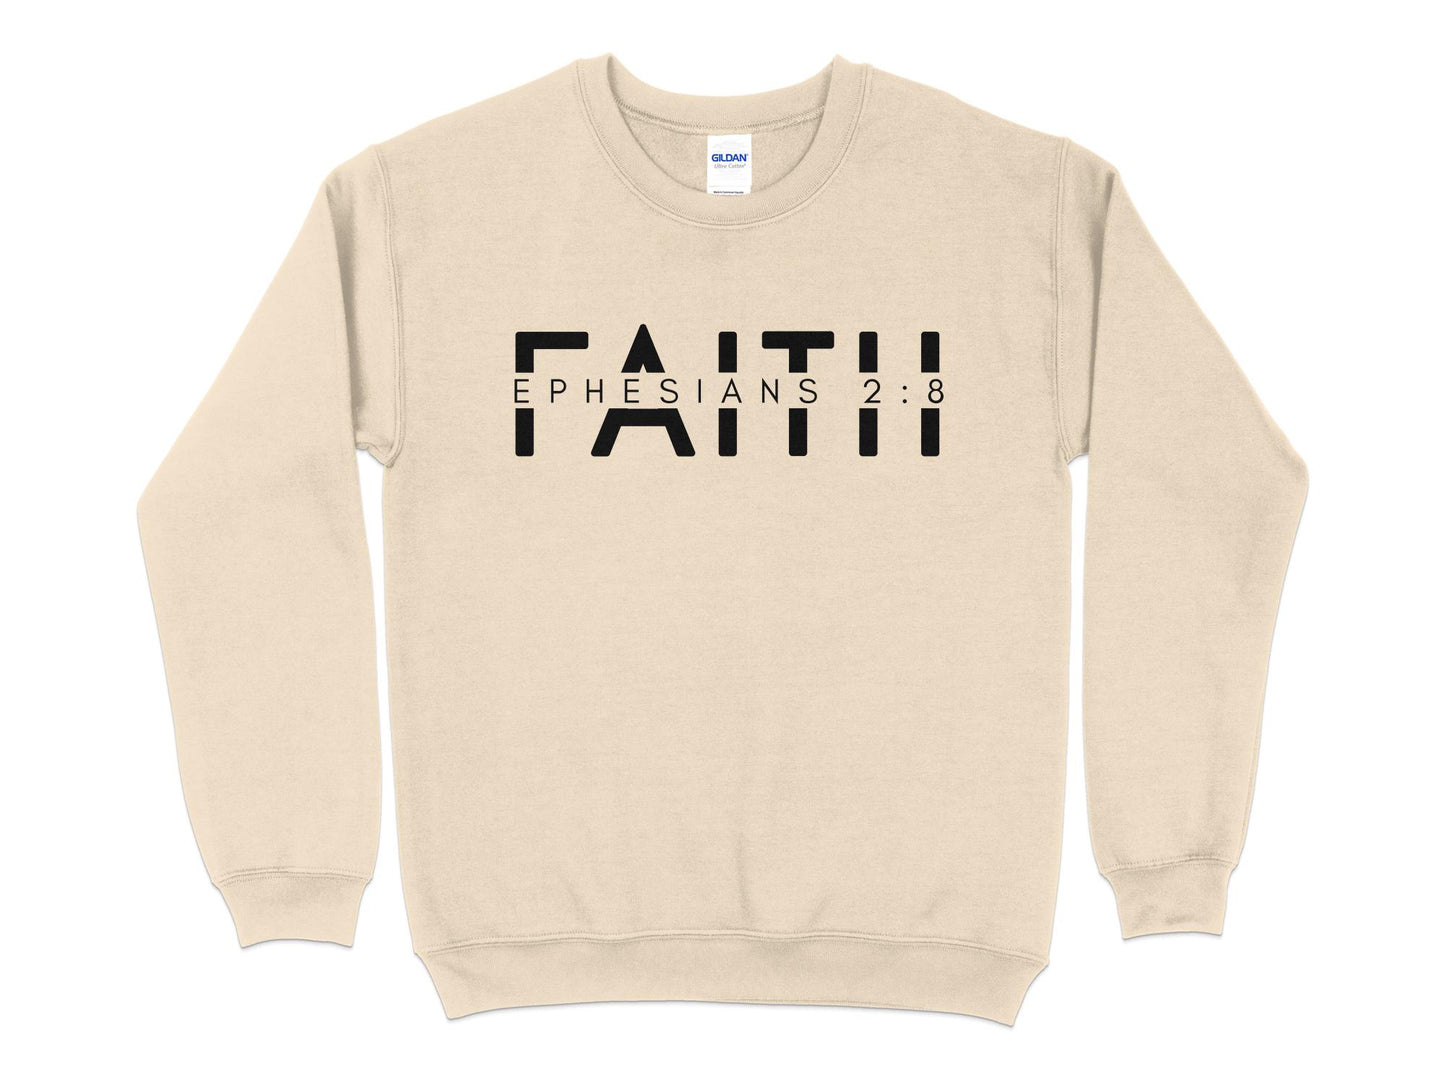 Unisex Faith Ephesians 2:8 Sweatshirt, Bible Verse Christian Pullover, Religious Scripture Soft Cotton Sweater, Casual Wear - Mardonyx Sweatshirt S / Sand